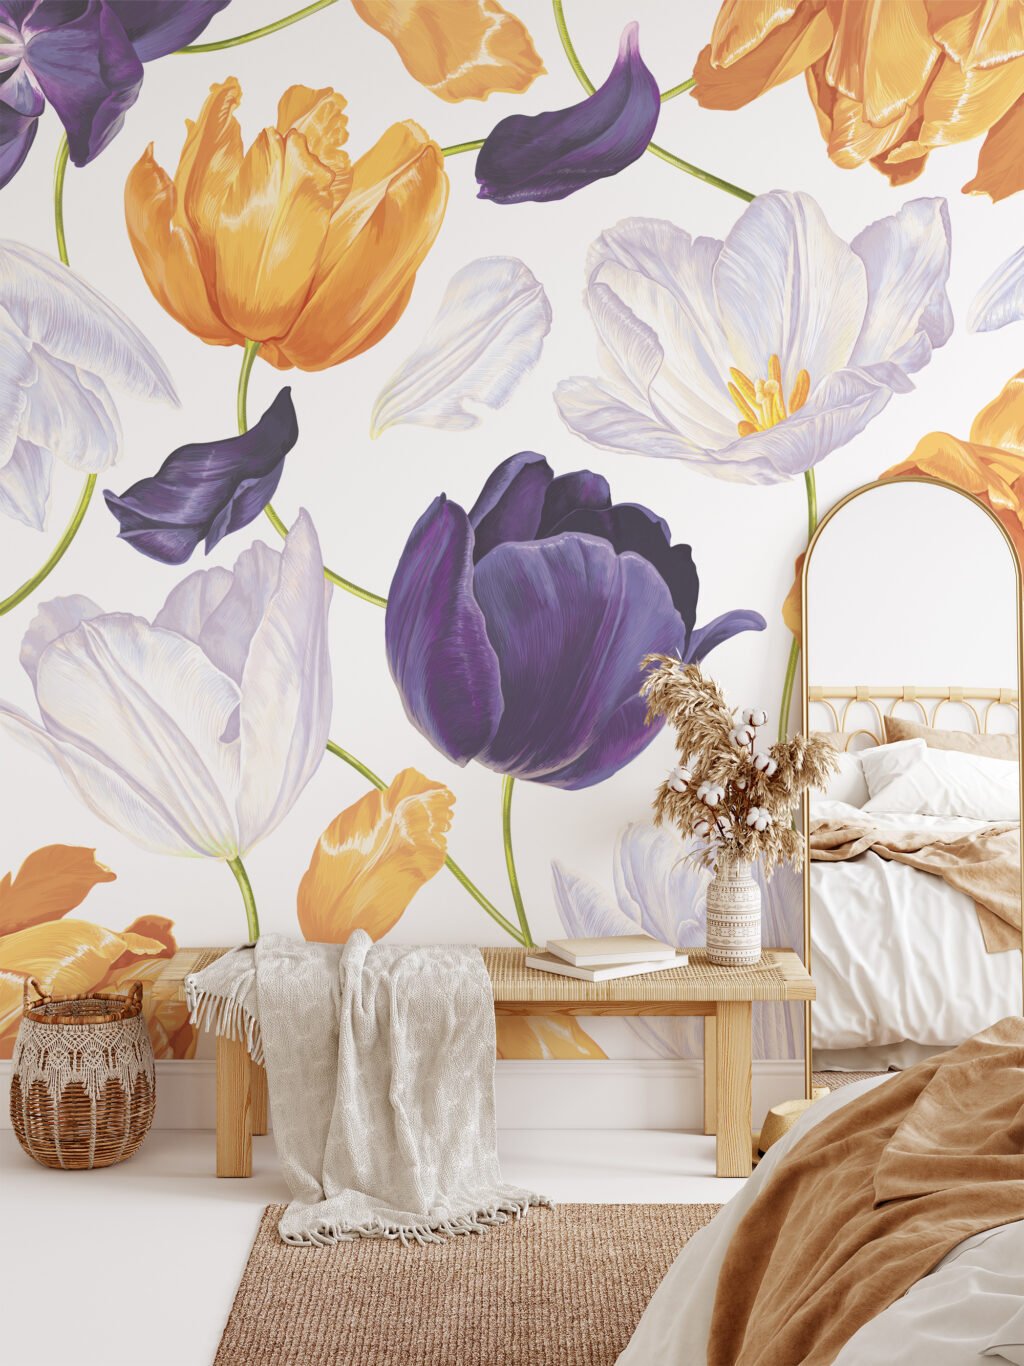 Modern Tasarımlı Yumuşak Dev Papatya Çiçekleri Desenli Duvar Kağıdı Çiçekli Duvar Kağıtları 4